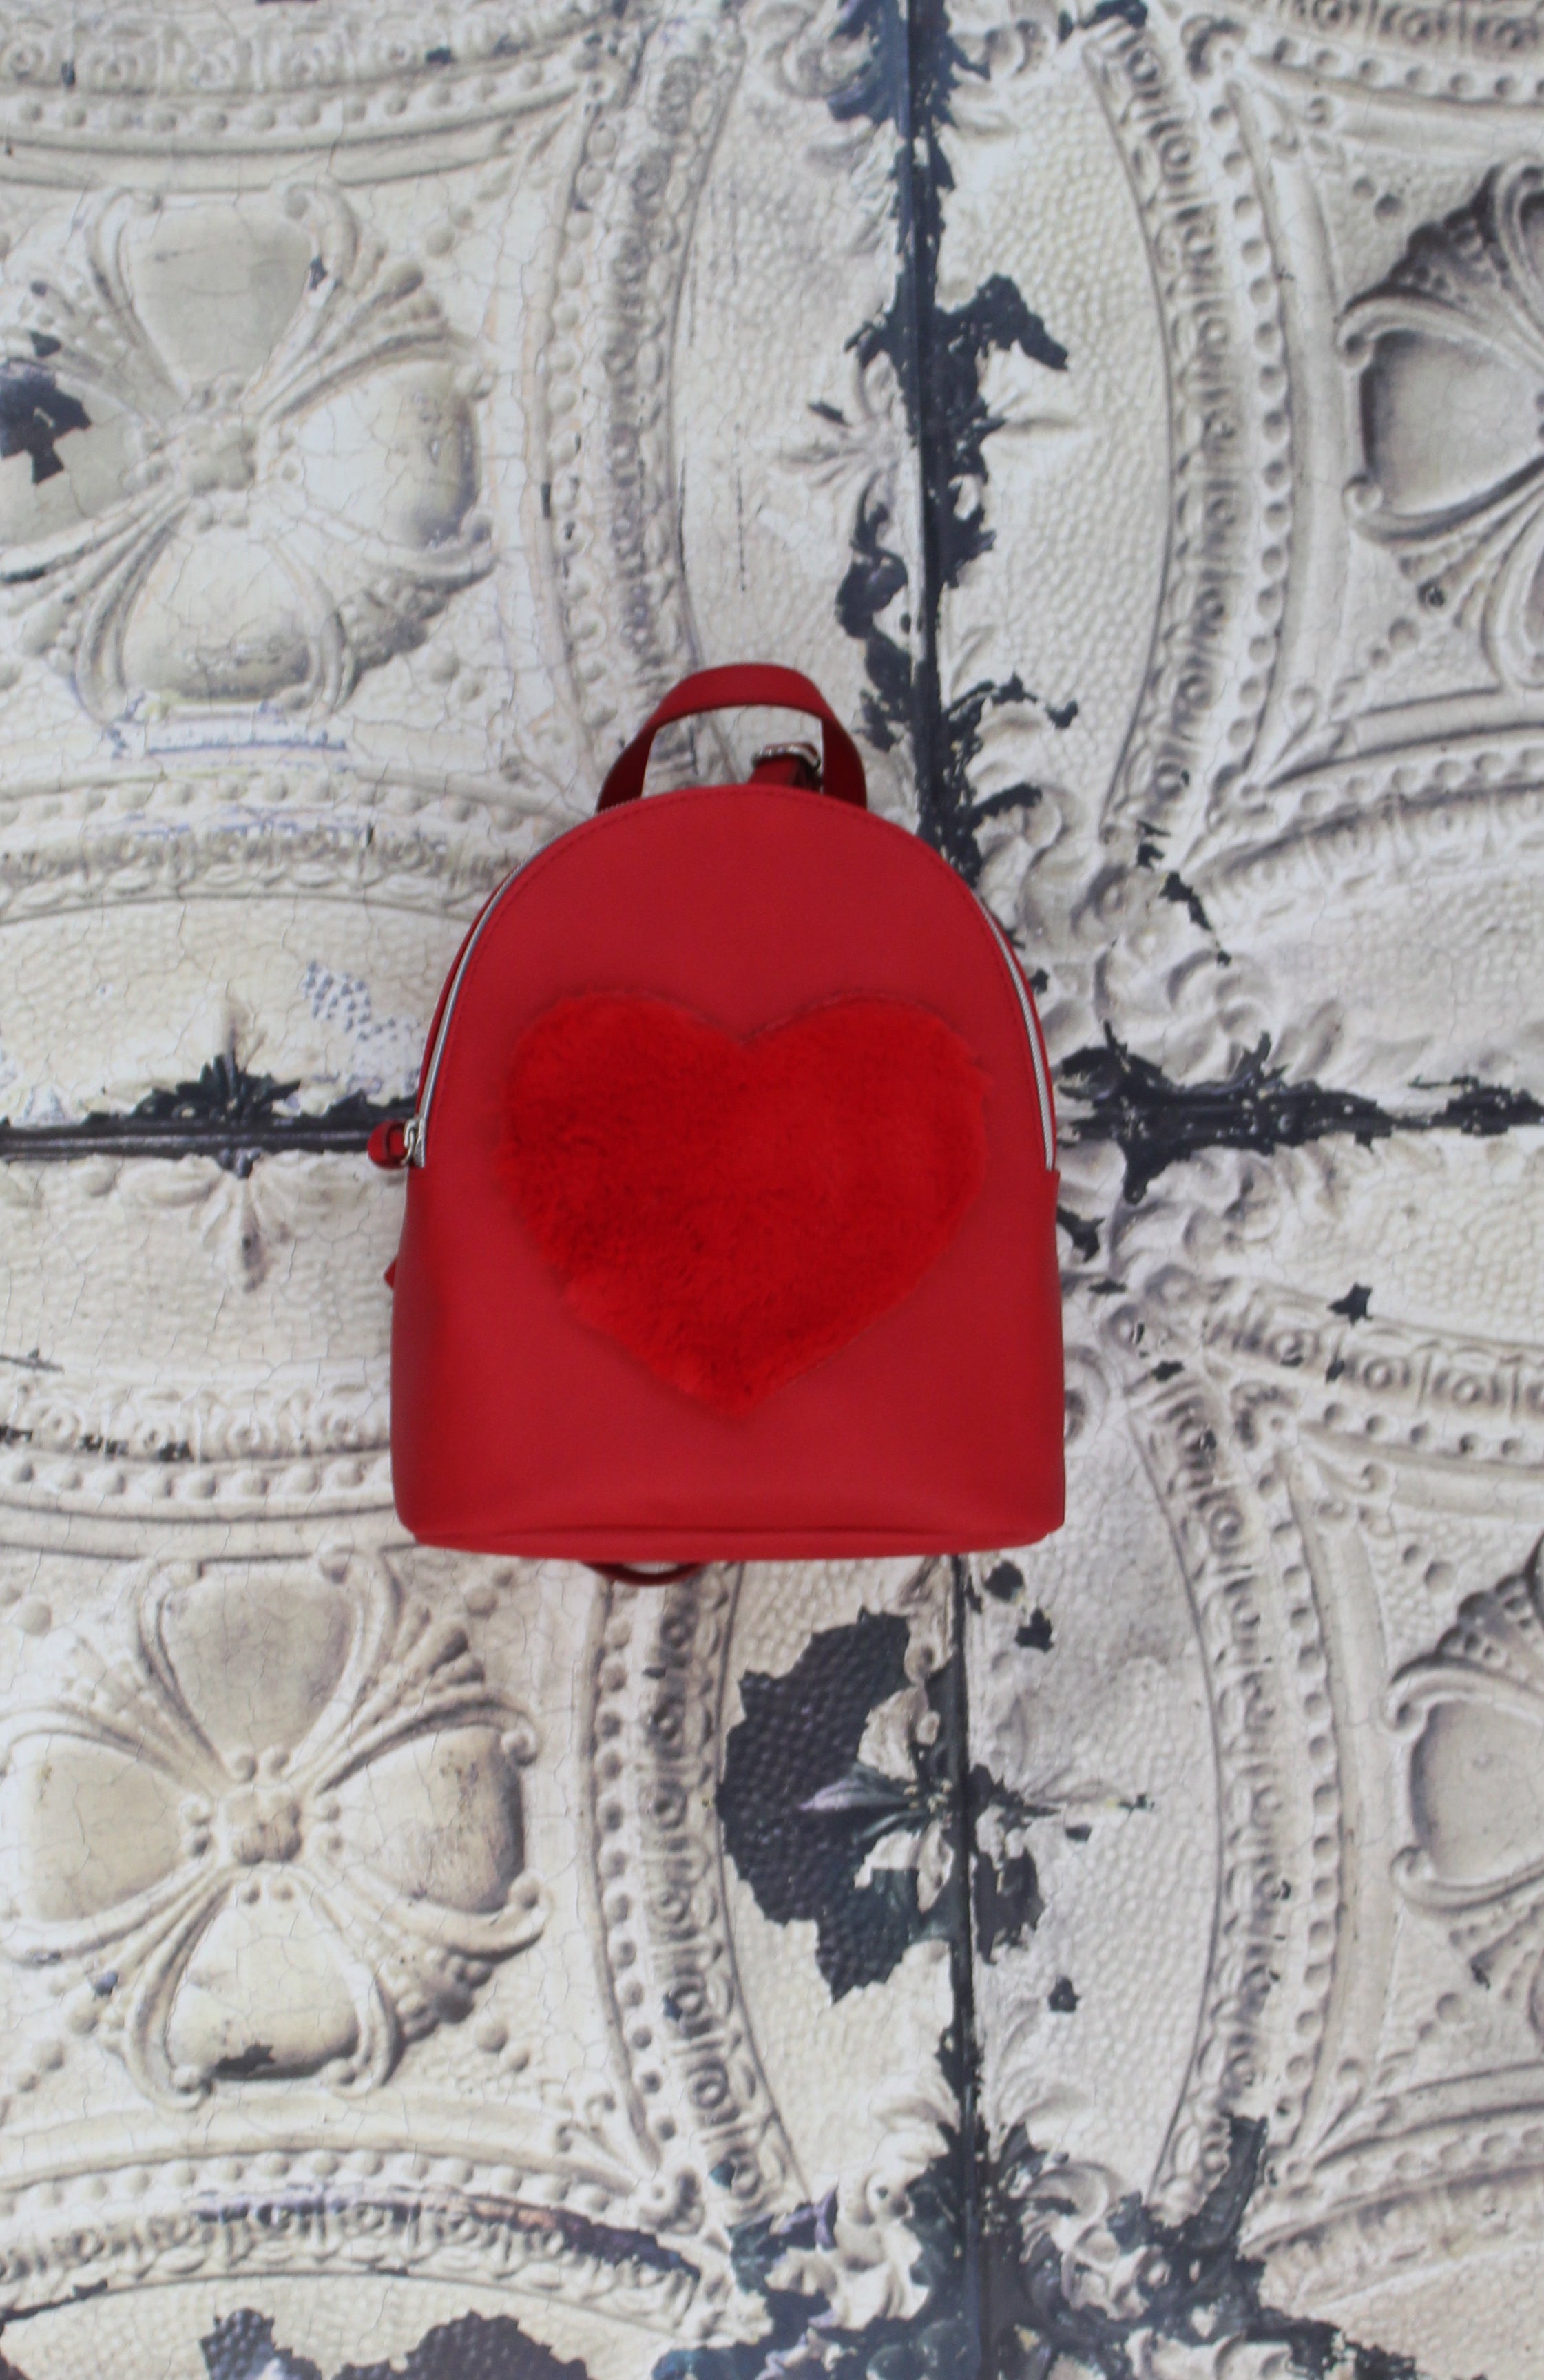 Love Furever Backpack in Red